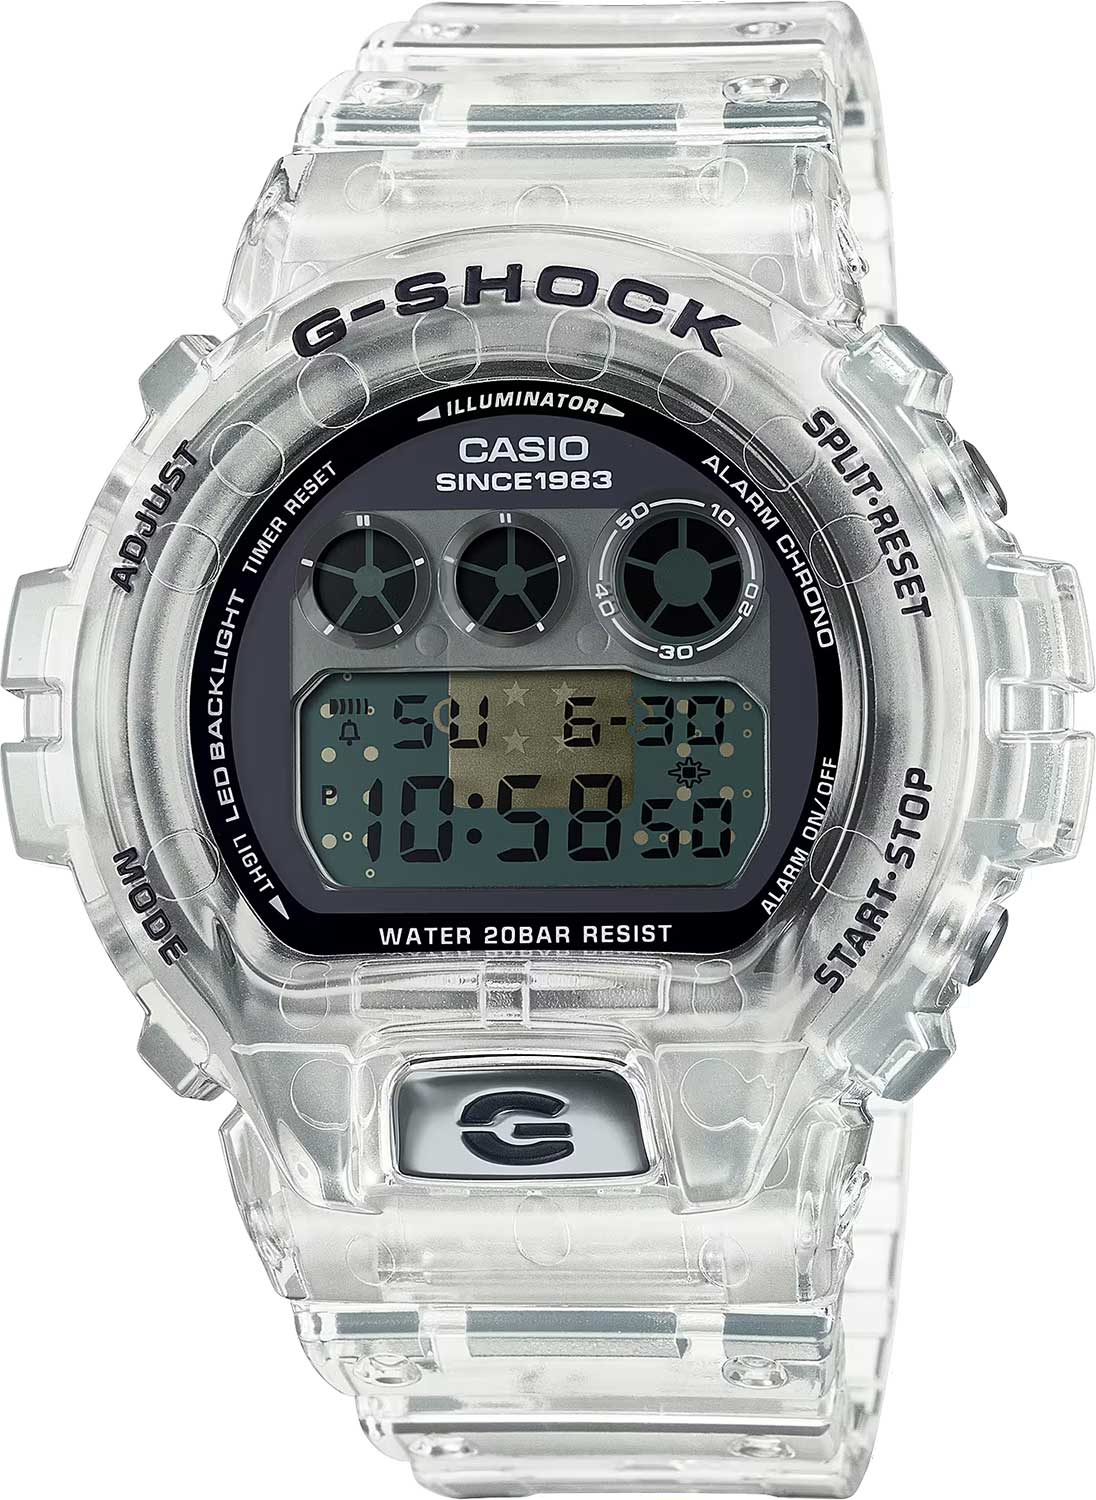    Casio G-SHOCK DW-6940RX-7  